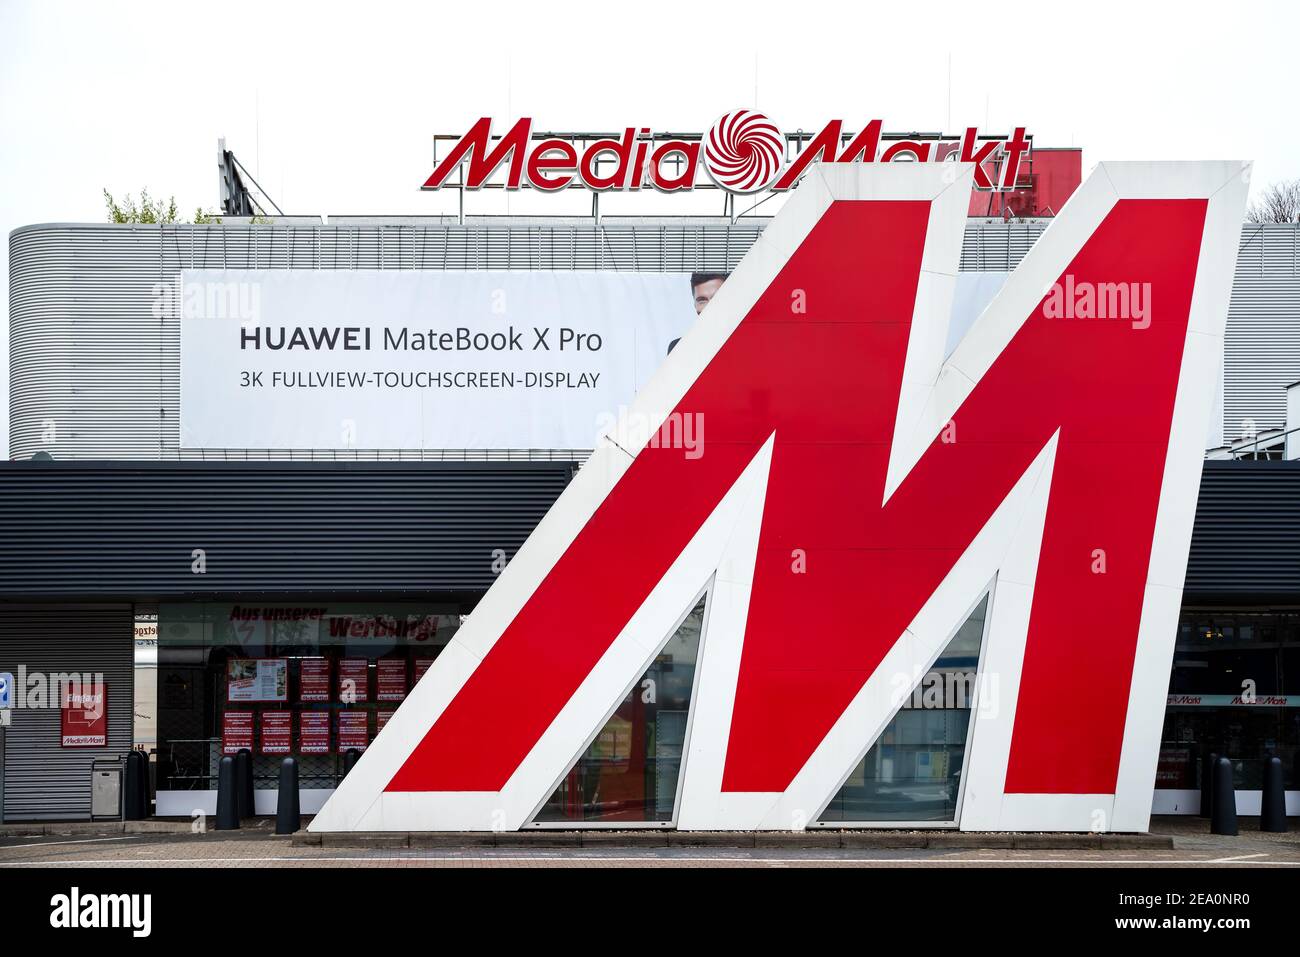 Media Markt store editorial photo. Image of company - 139163616